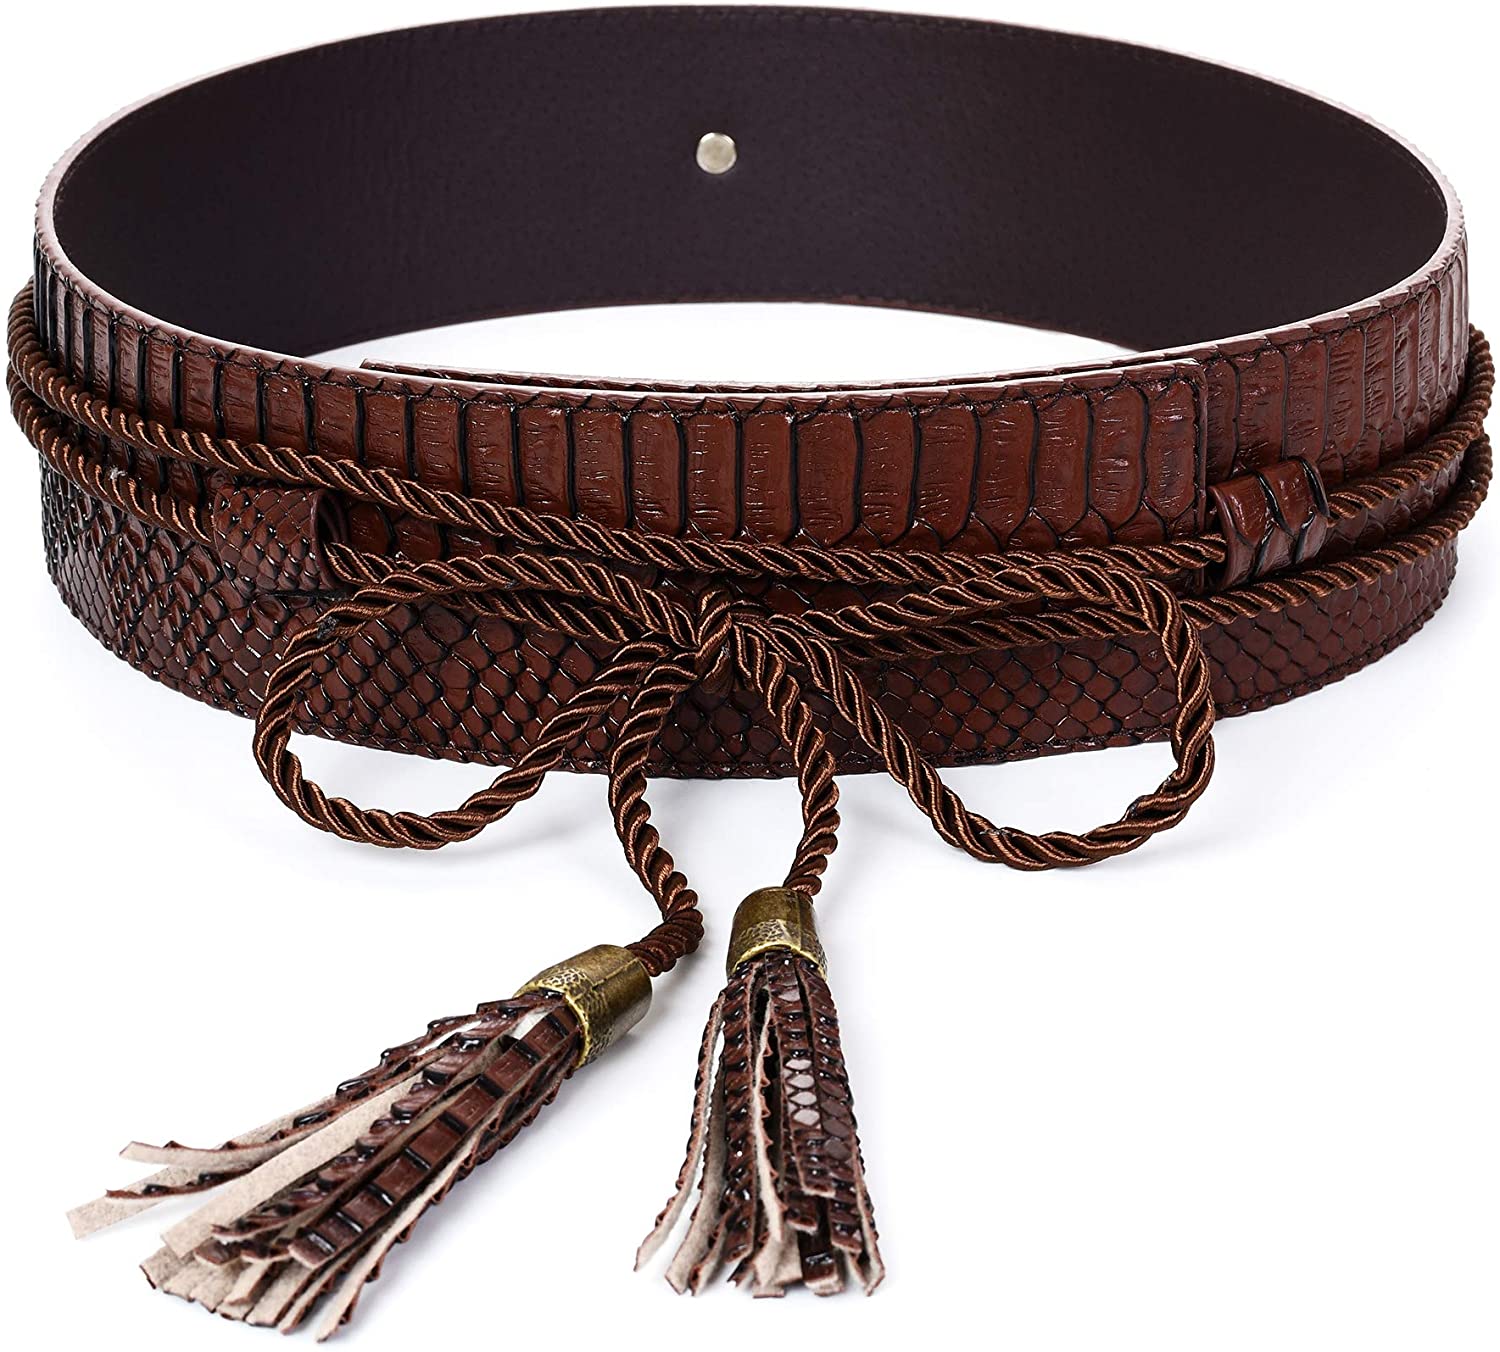 Women's Braided Leather Belt by Gap Cognac Size L